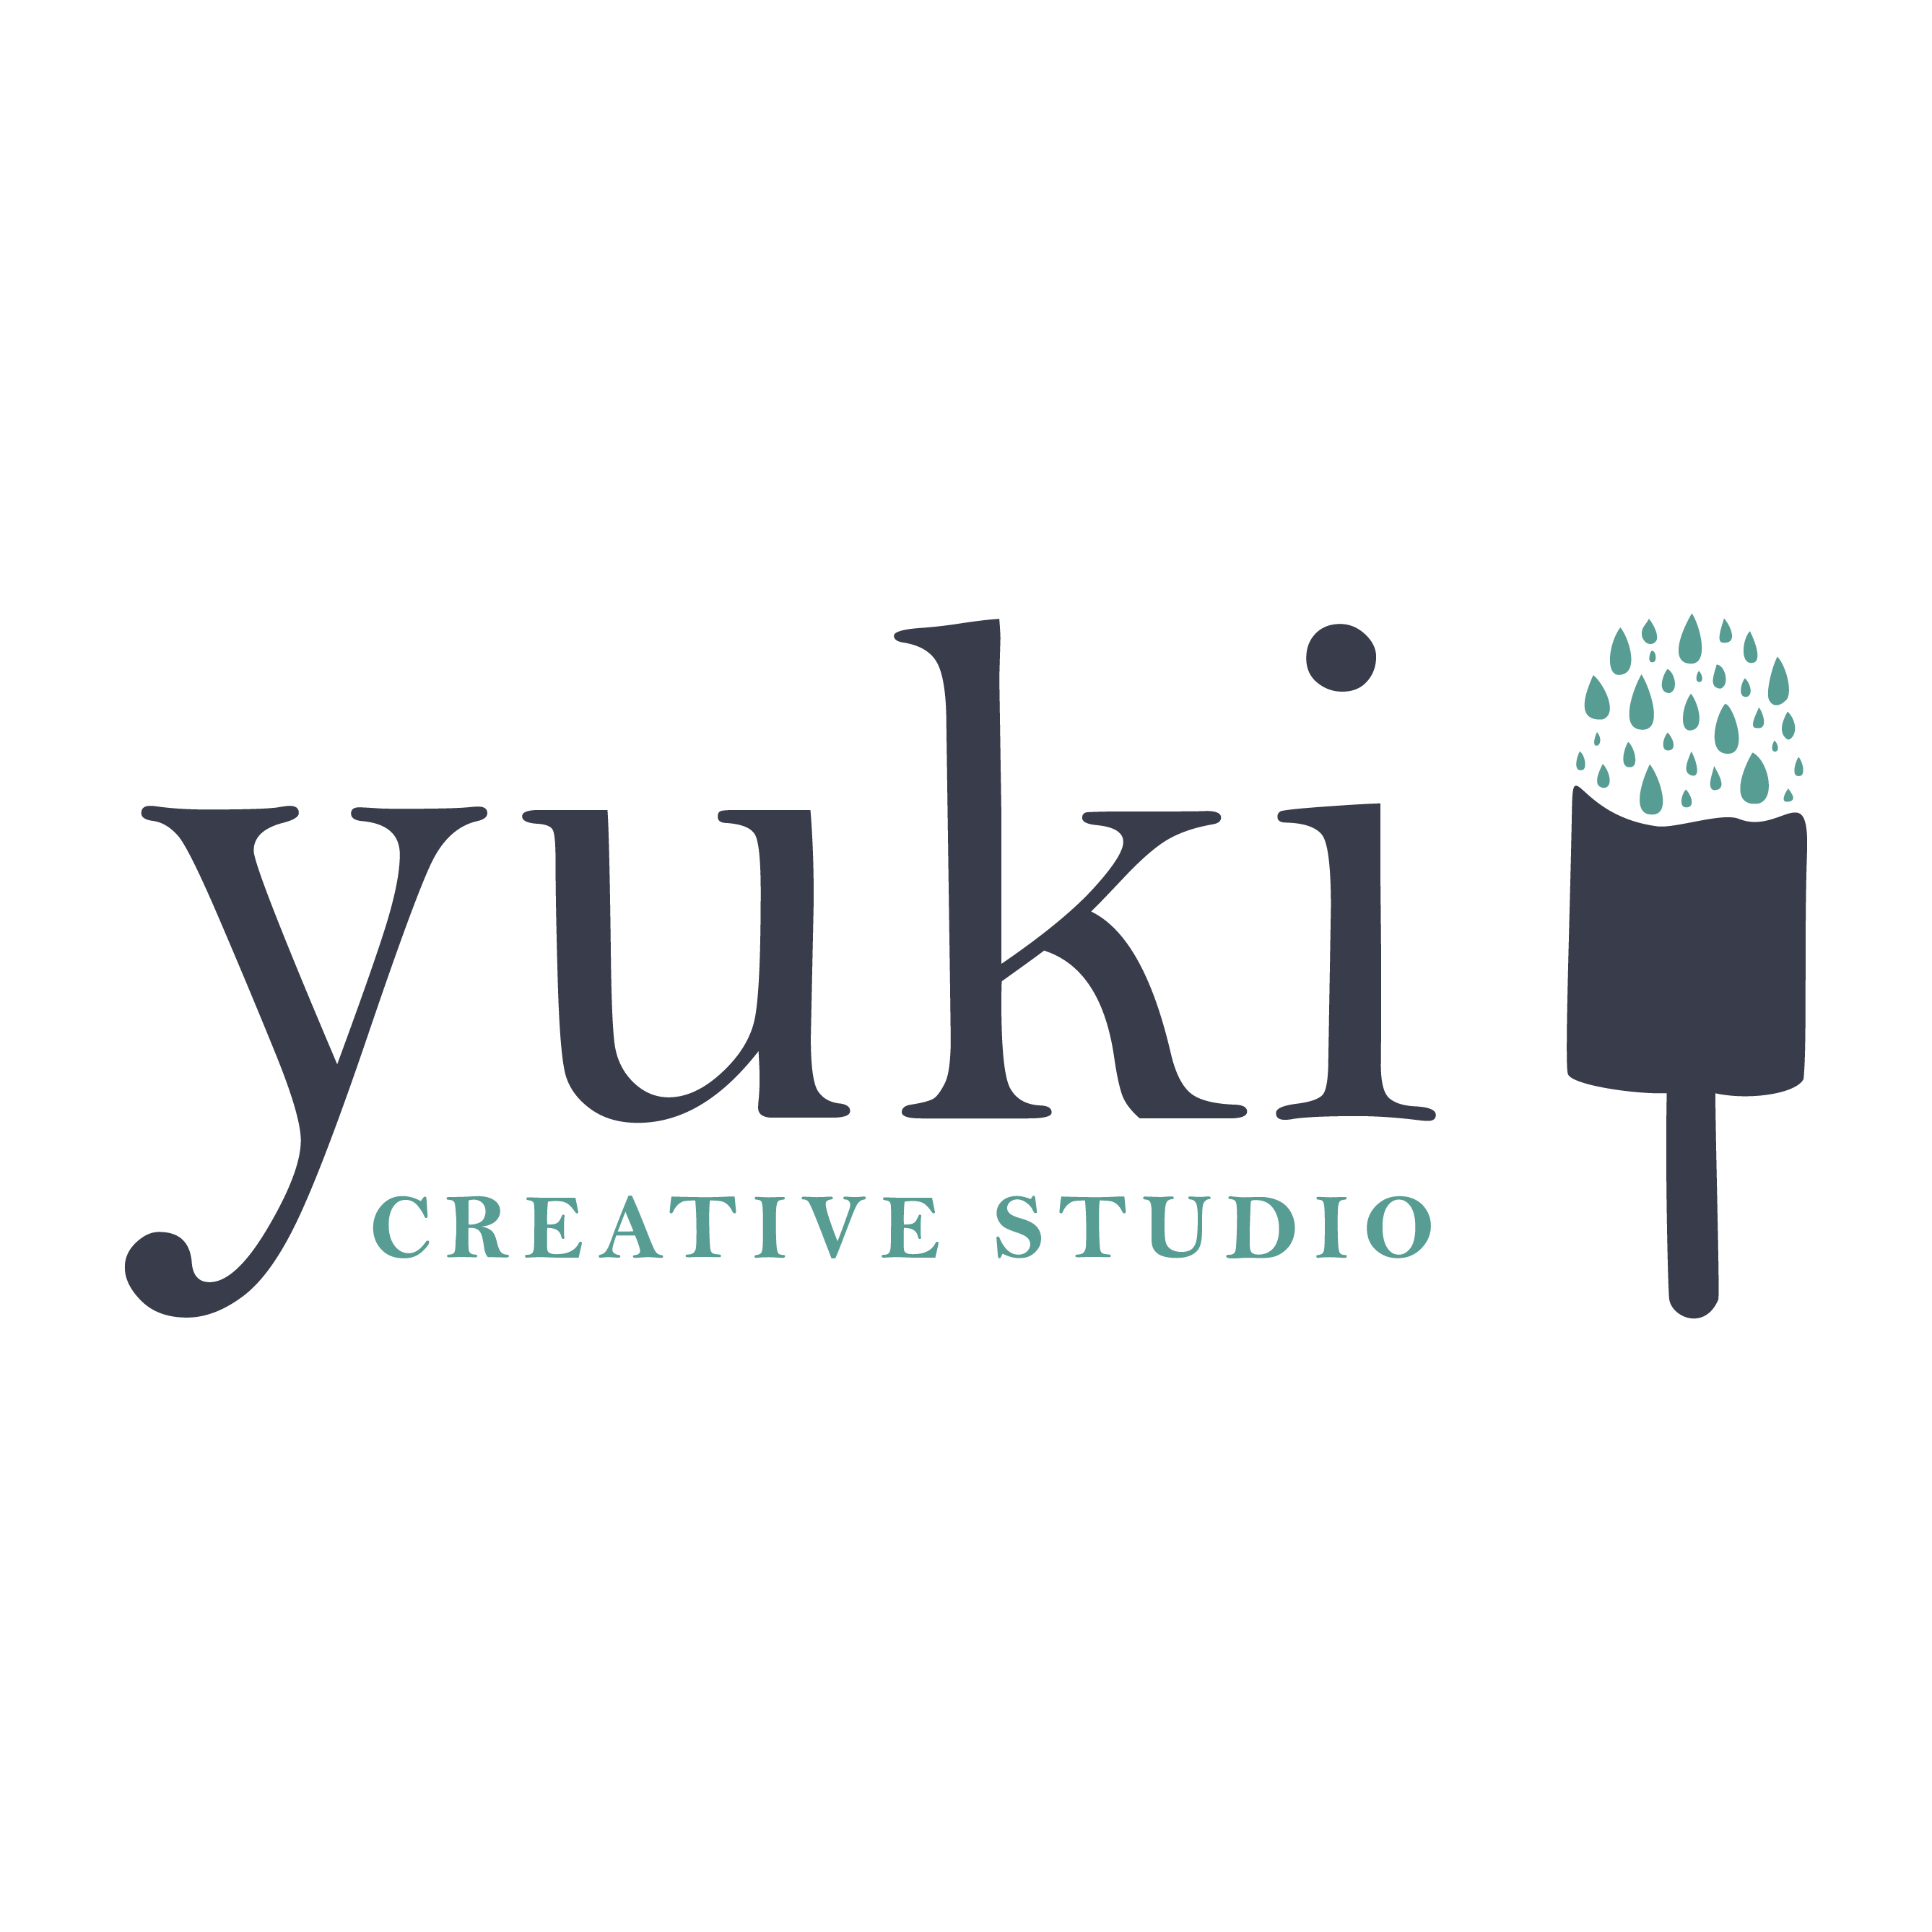 Yuki Creative Studio